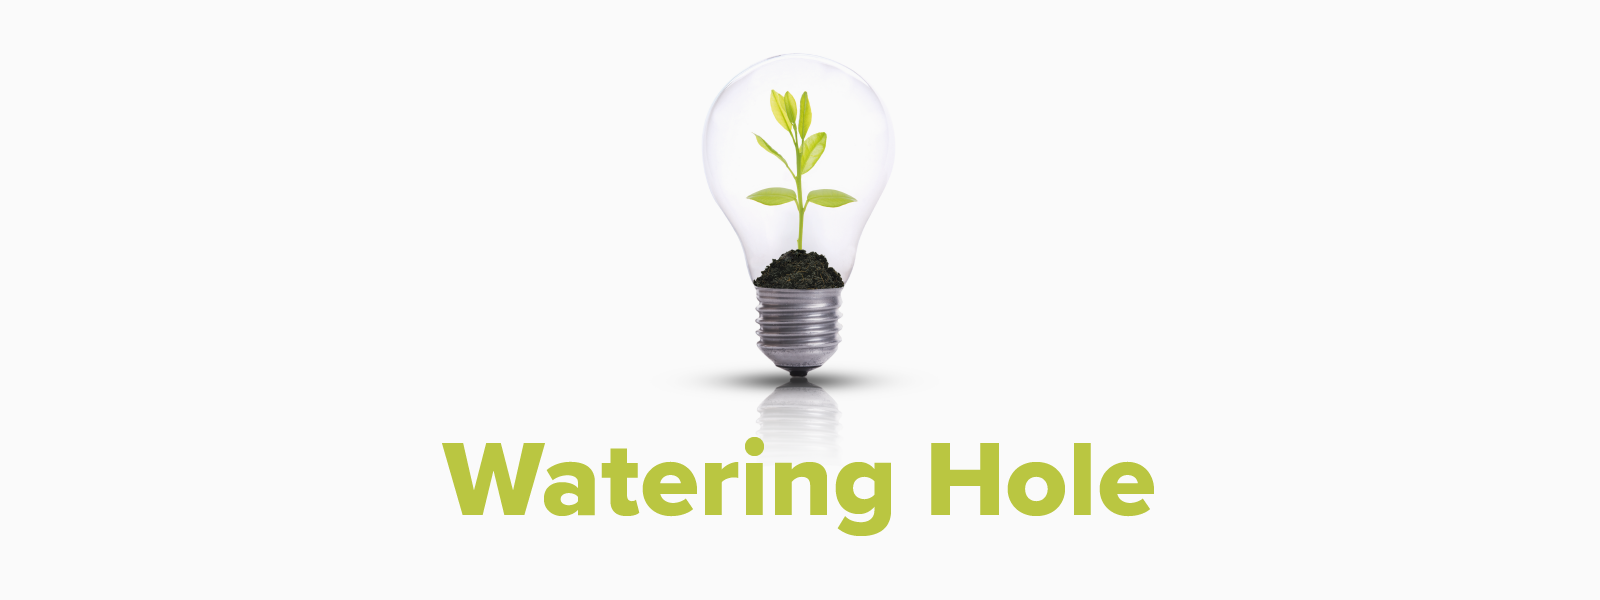 UTDallas-Watering-Hole-Header